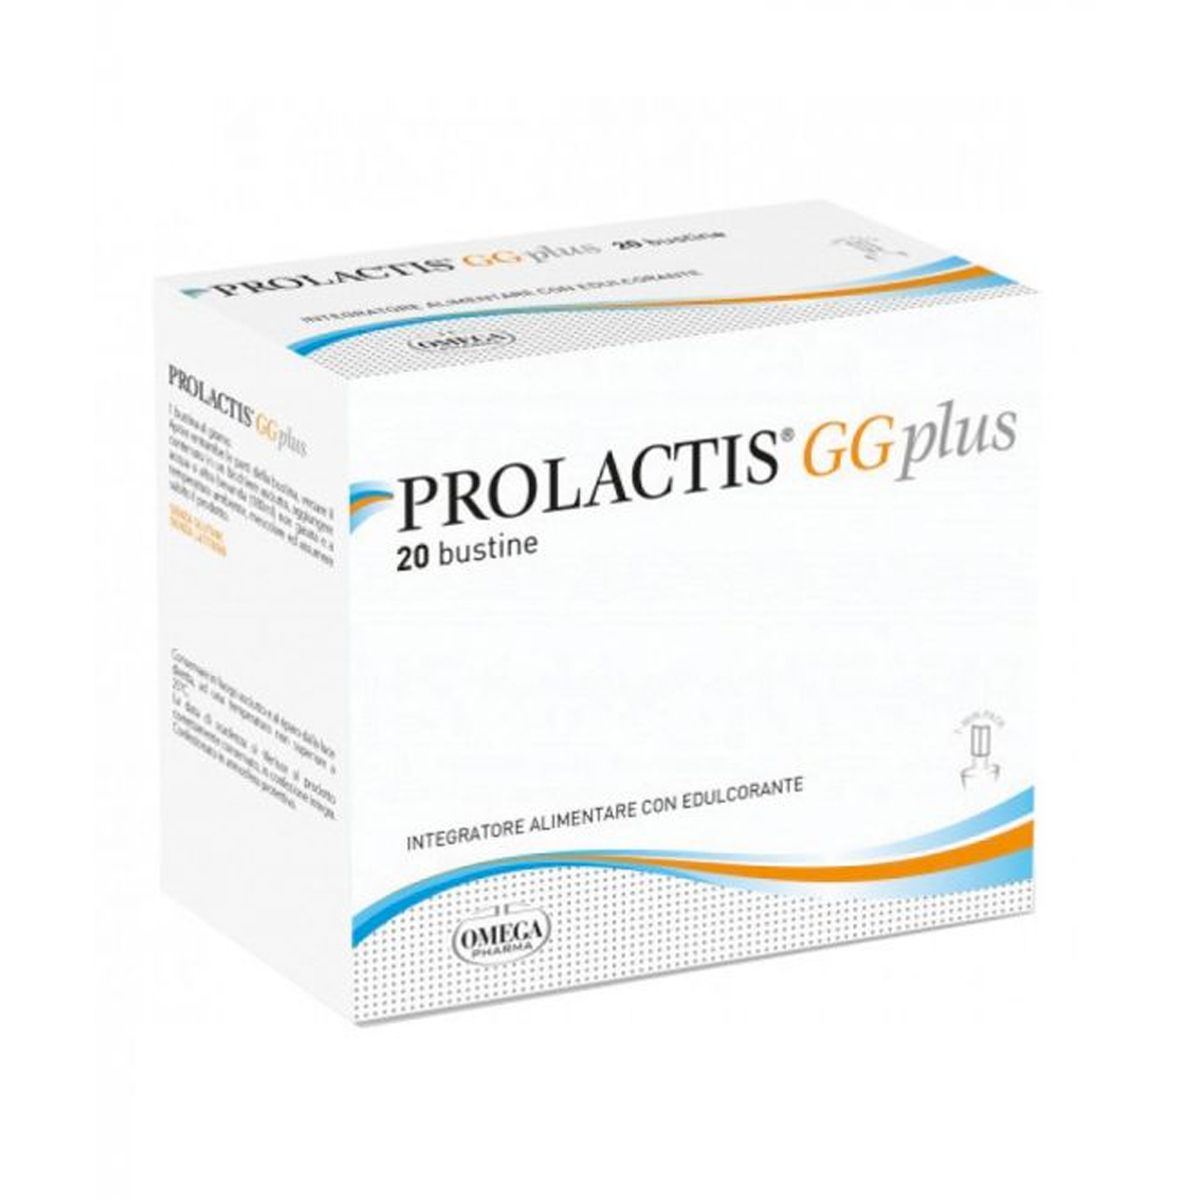 Omega Pharma Prolactis Gg Plus Integratore Fermenti Lattici 20 Bustine